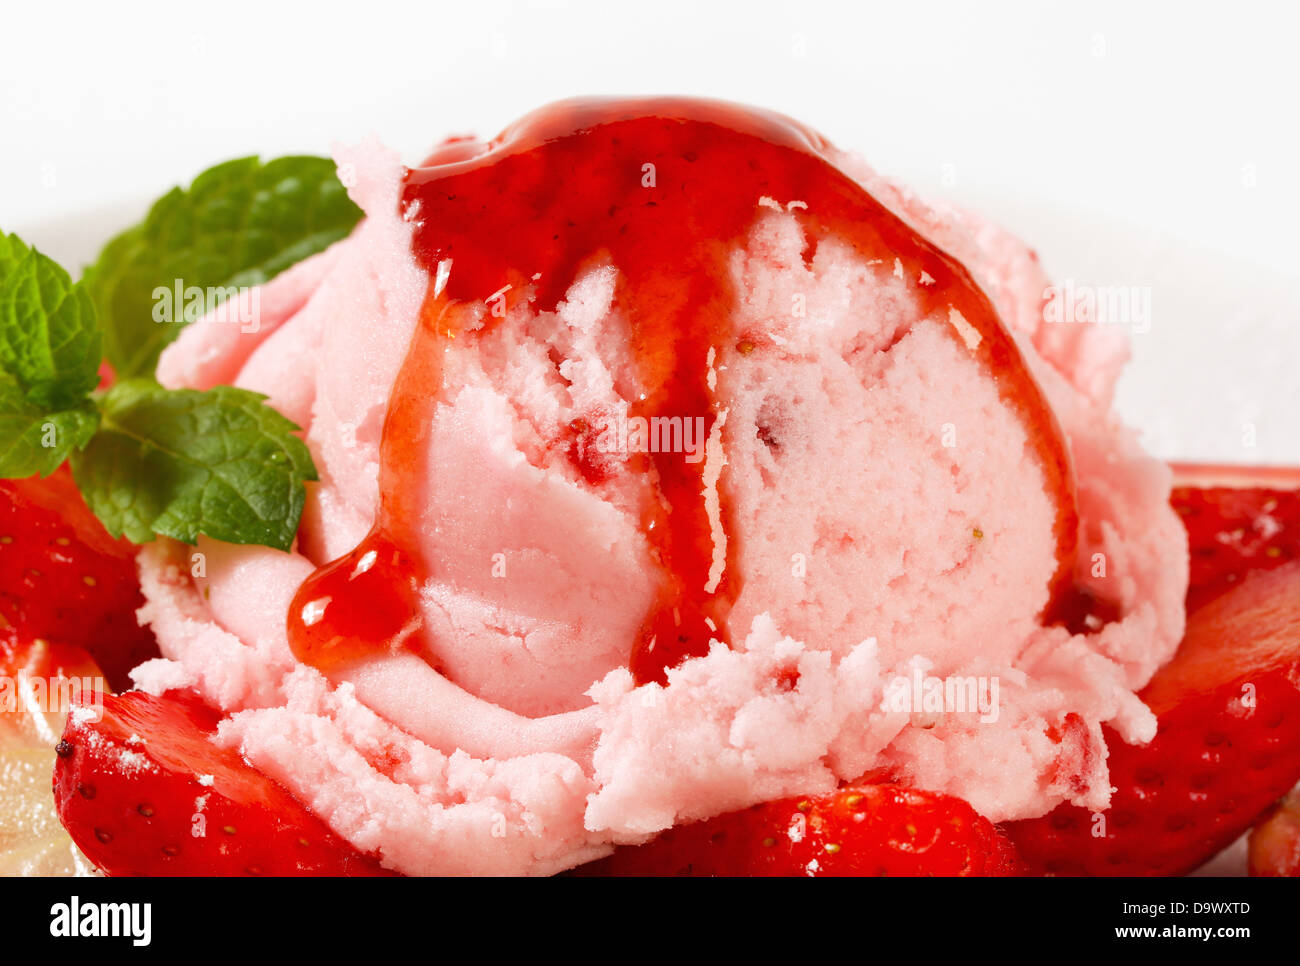 Scoop of pink ice cream with fresh strawberries Stock Photo